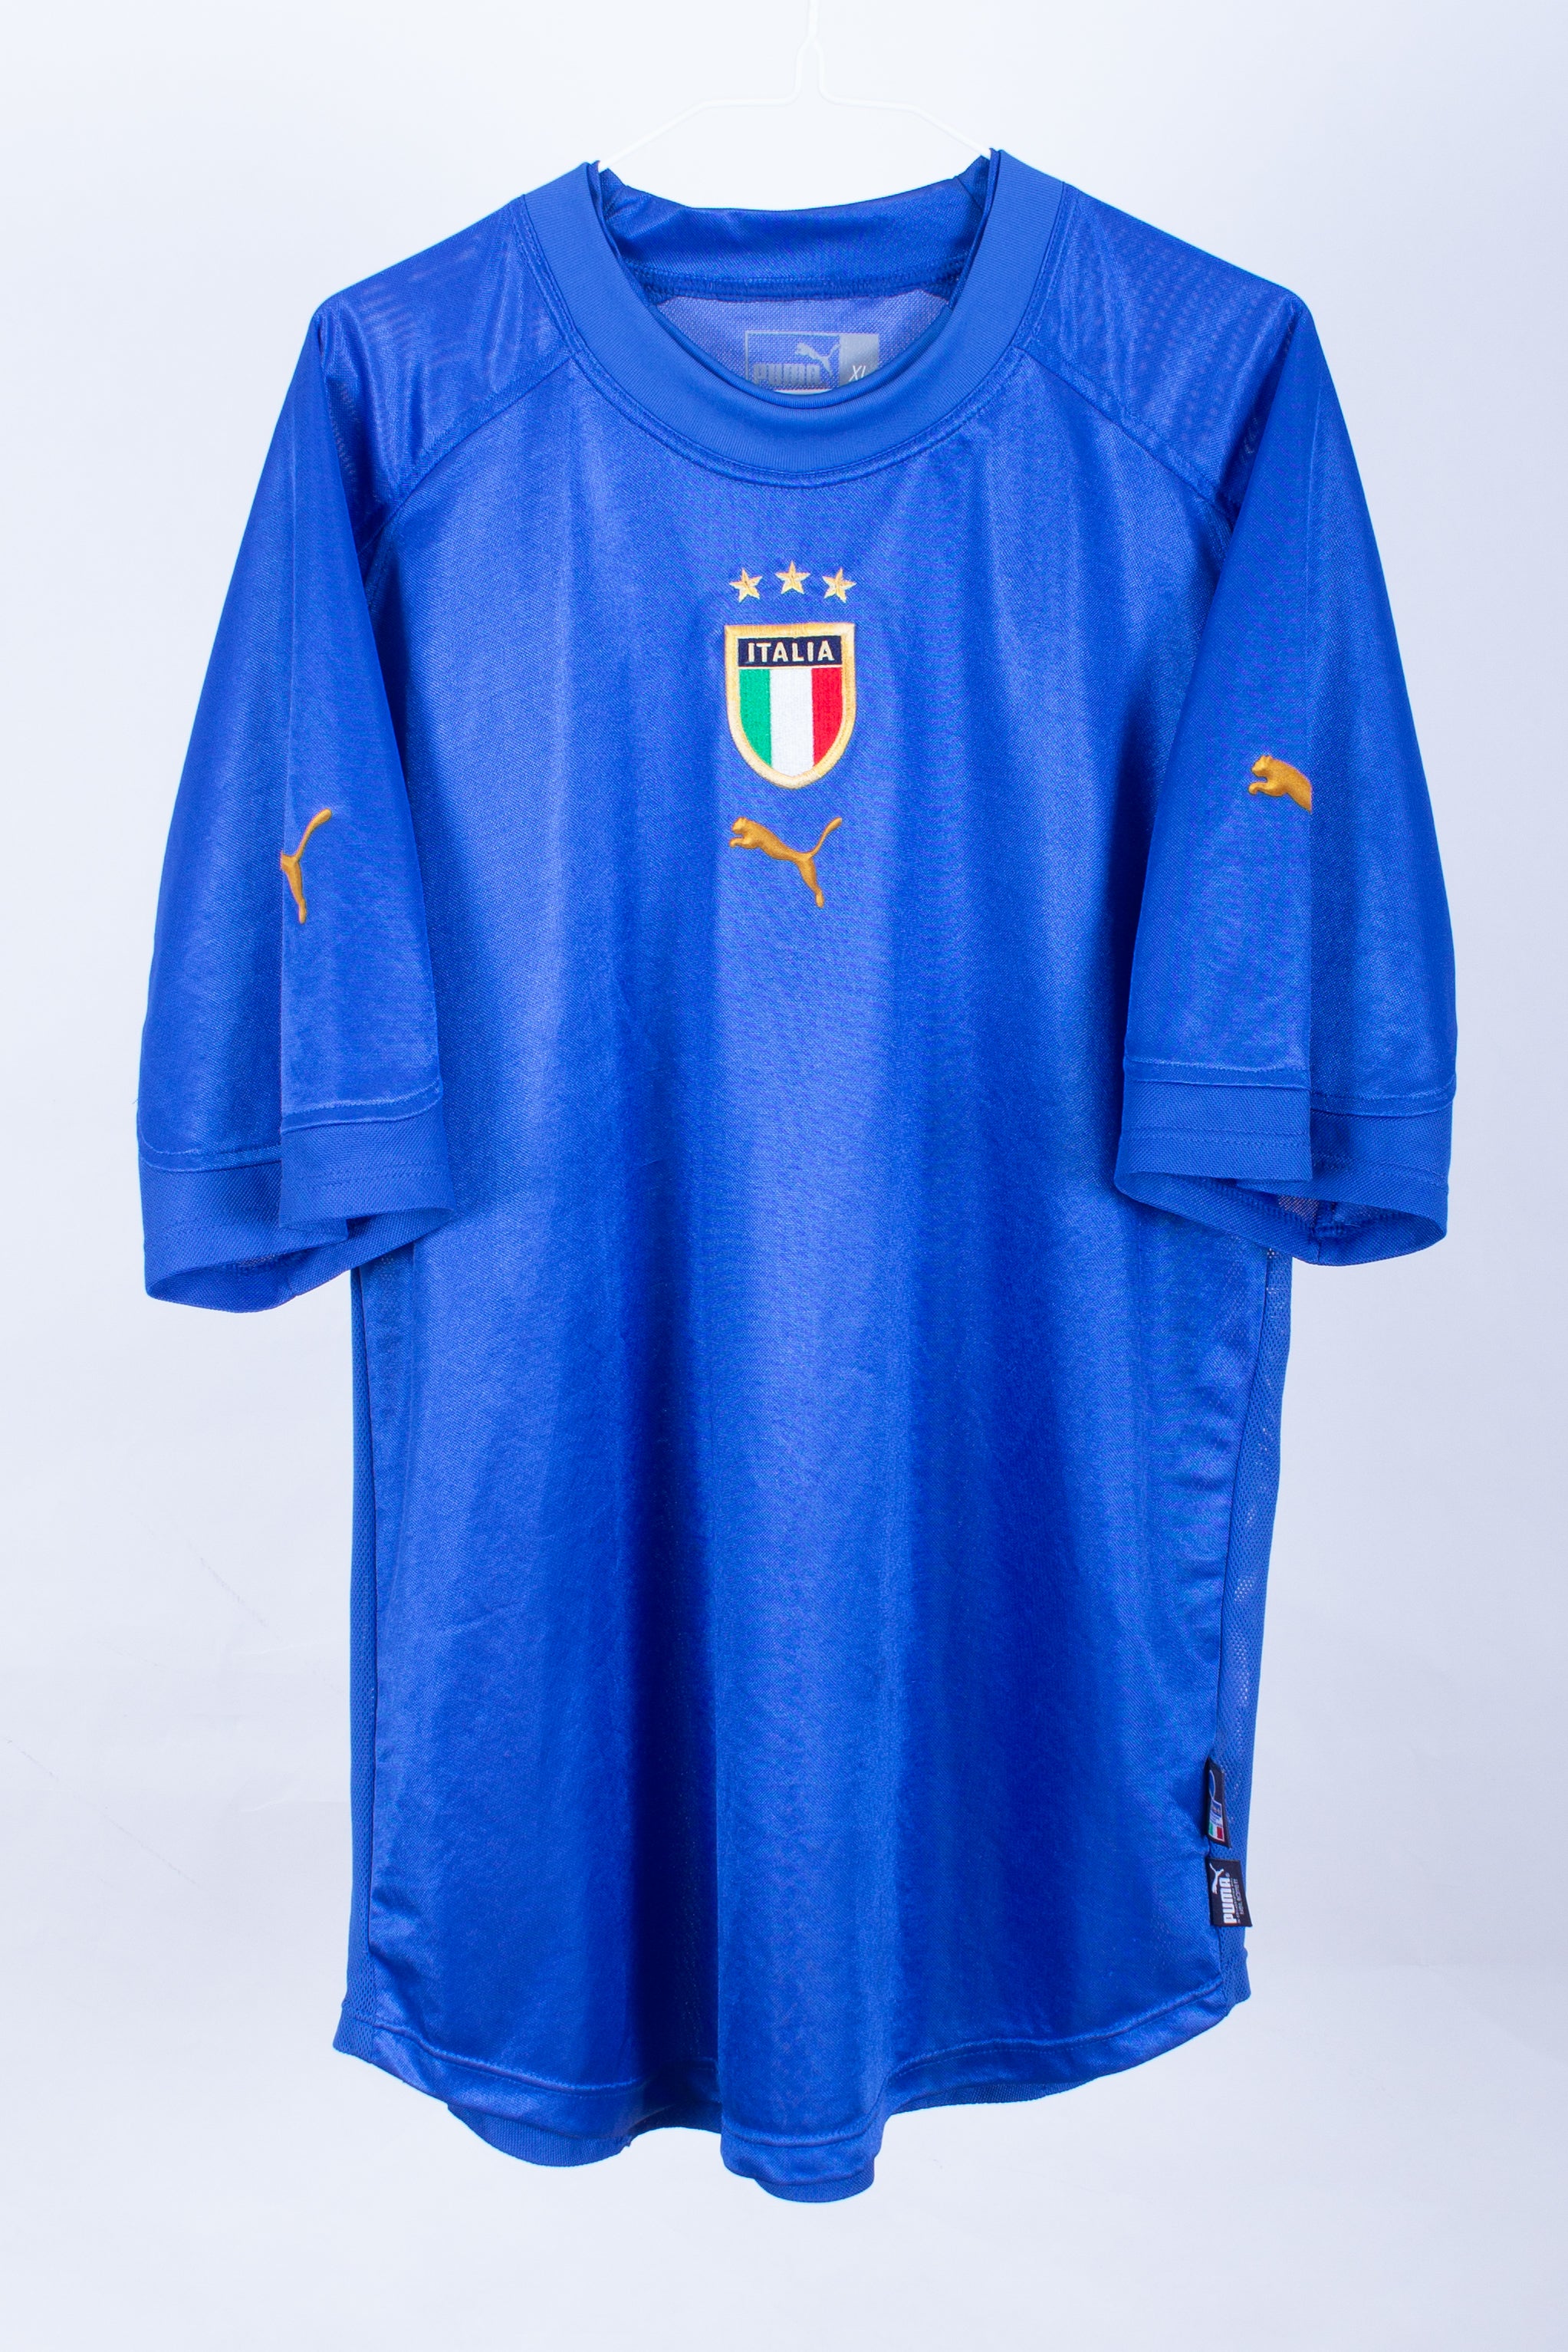 Italy 2004 Home Shirt